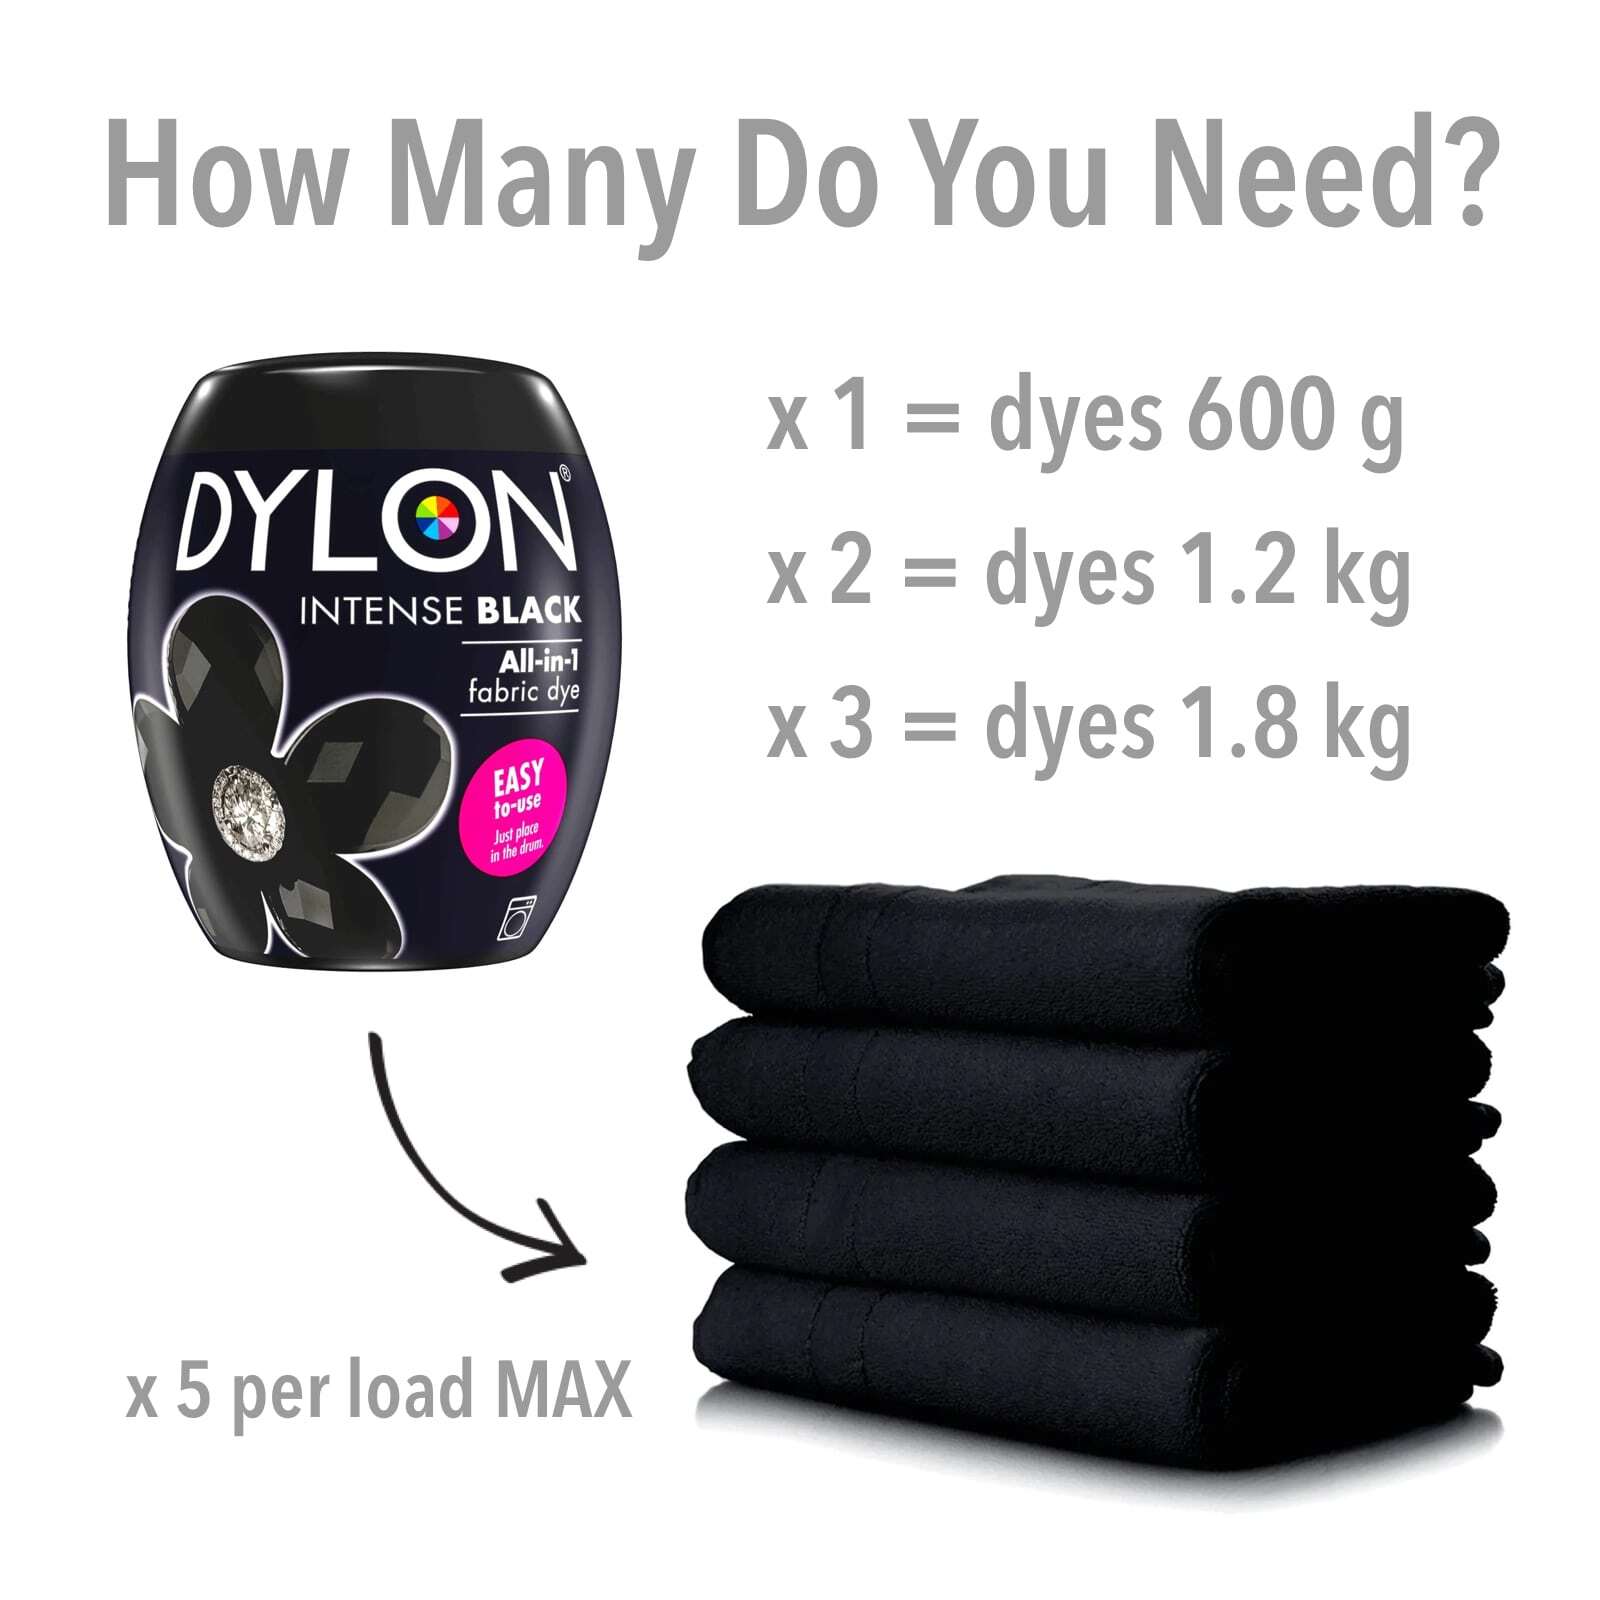 Dylon Machine Dye Pod 350g 12 Intense Black - Wilsons - Import